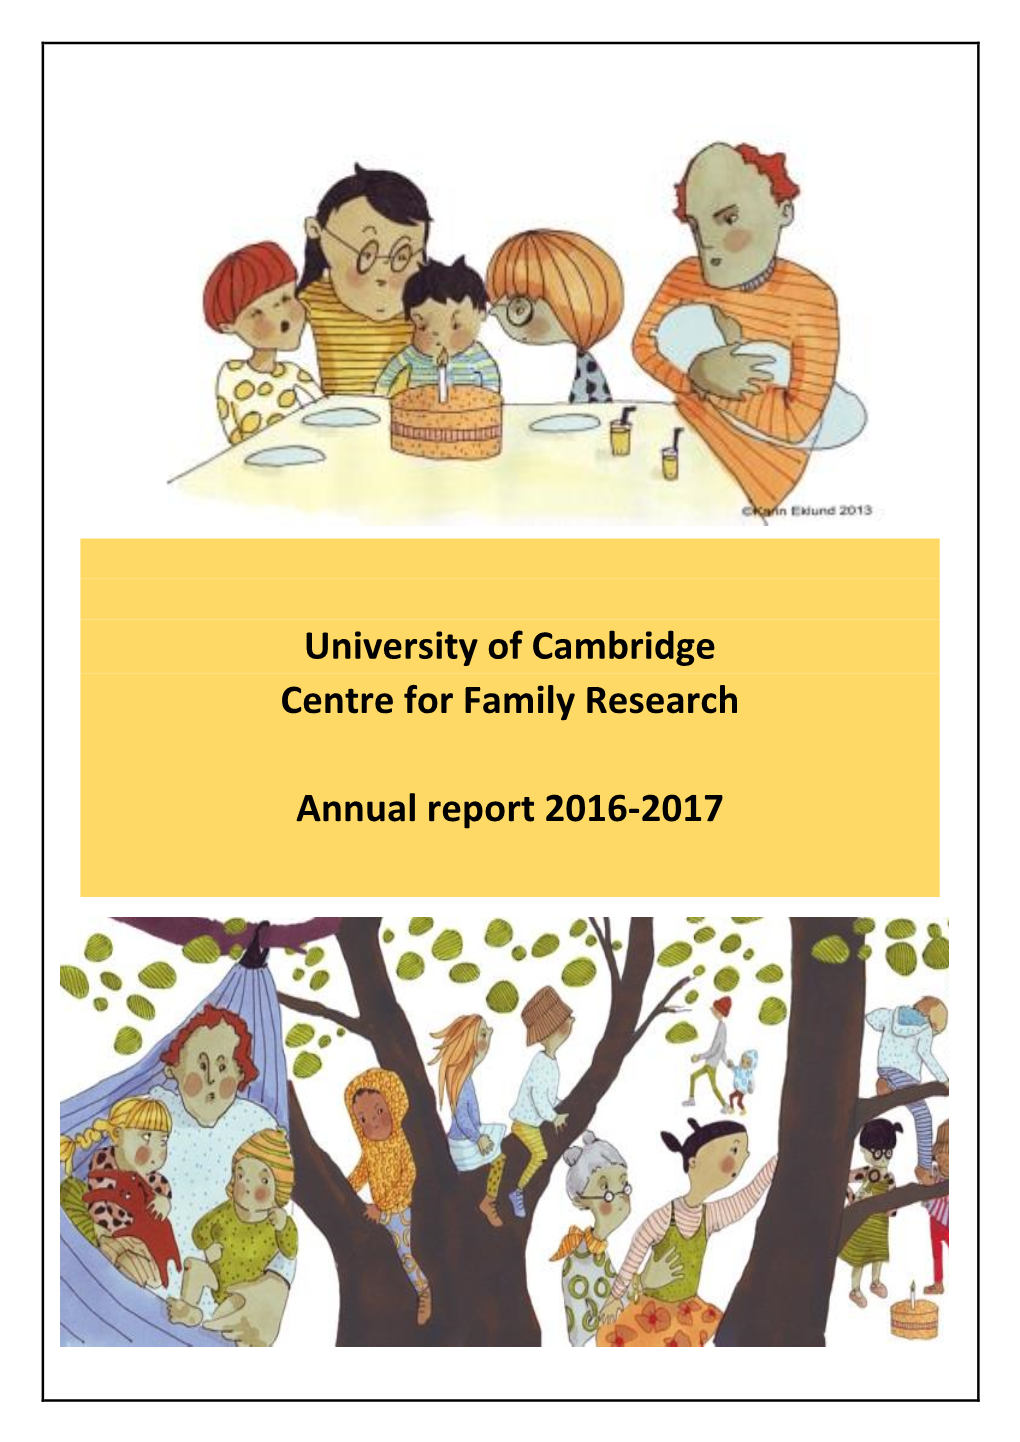 CFR Annual Report 2016-2017